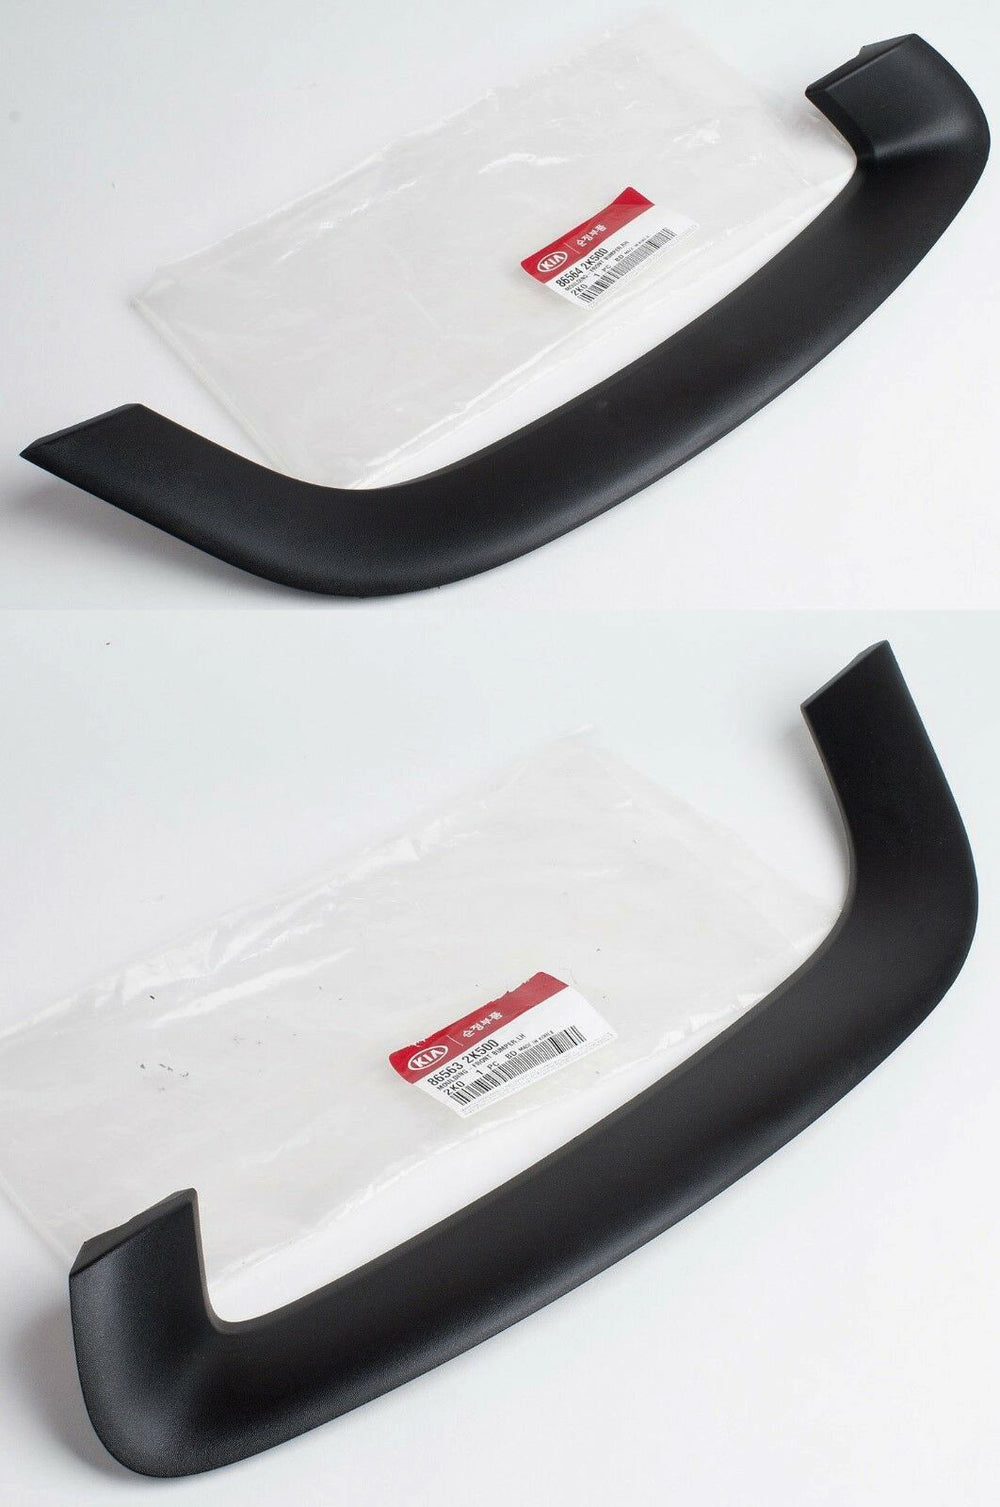 2012-2013 KIA Soul Genuine Front Bumper Trim Right & Left Sides Headlight Molding 2pcs Set